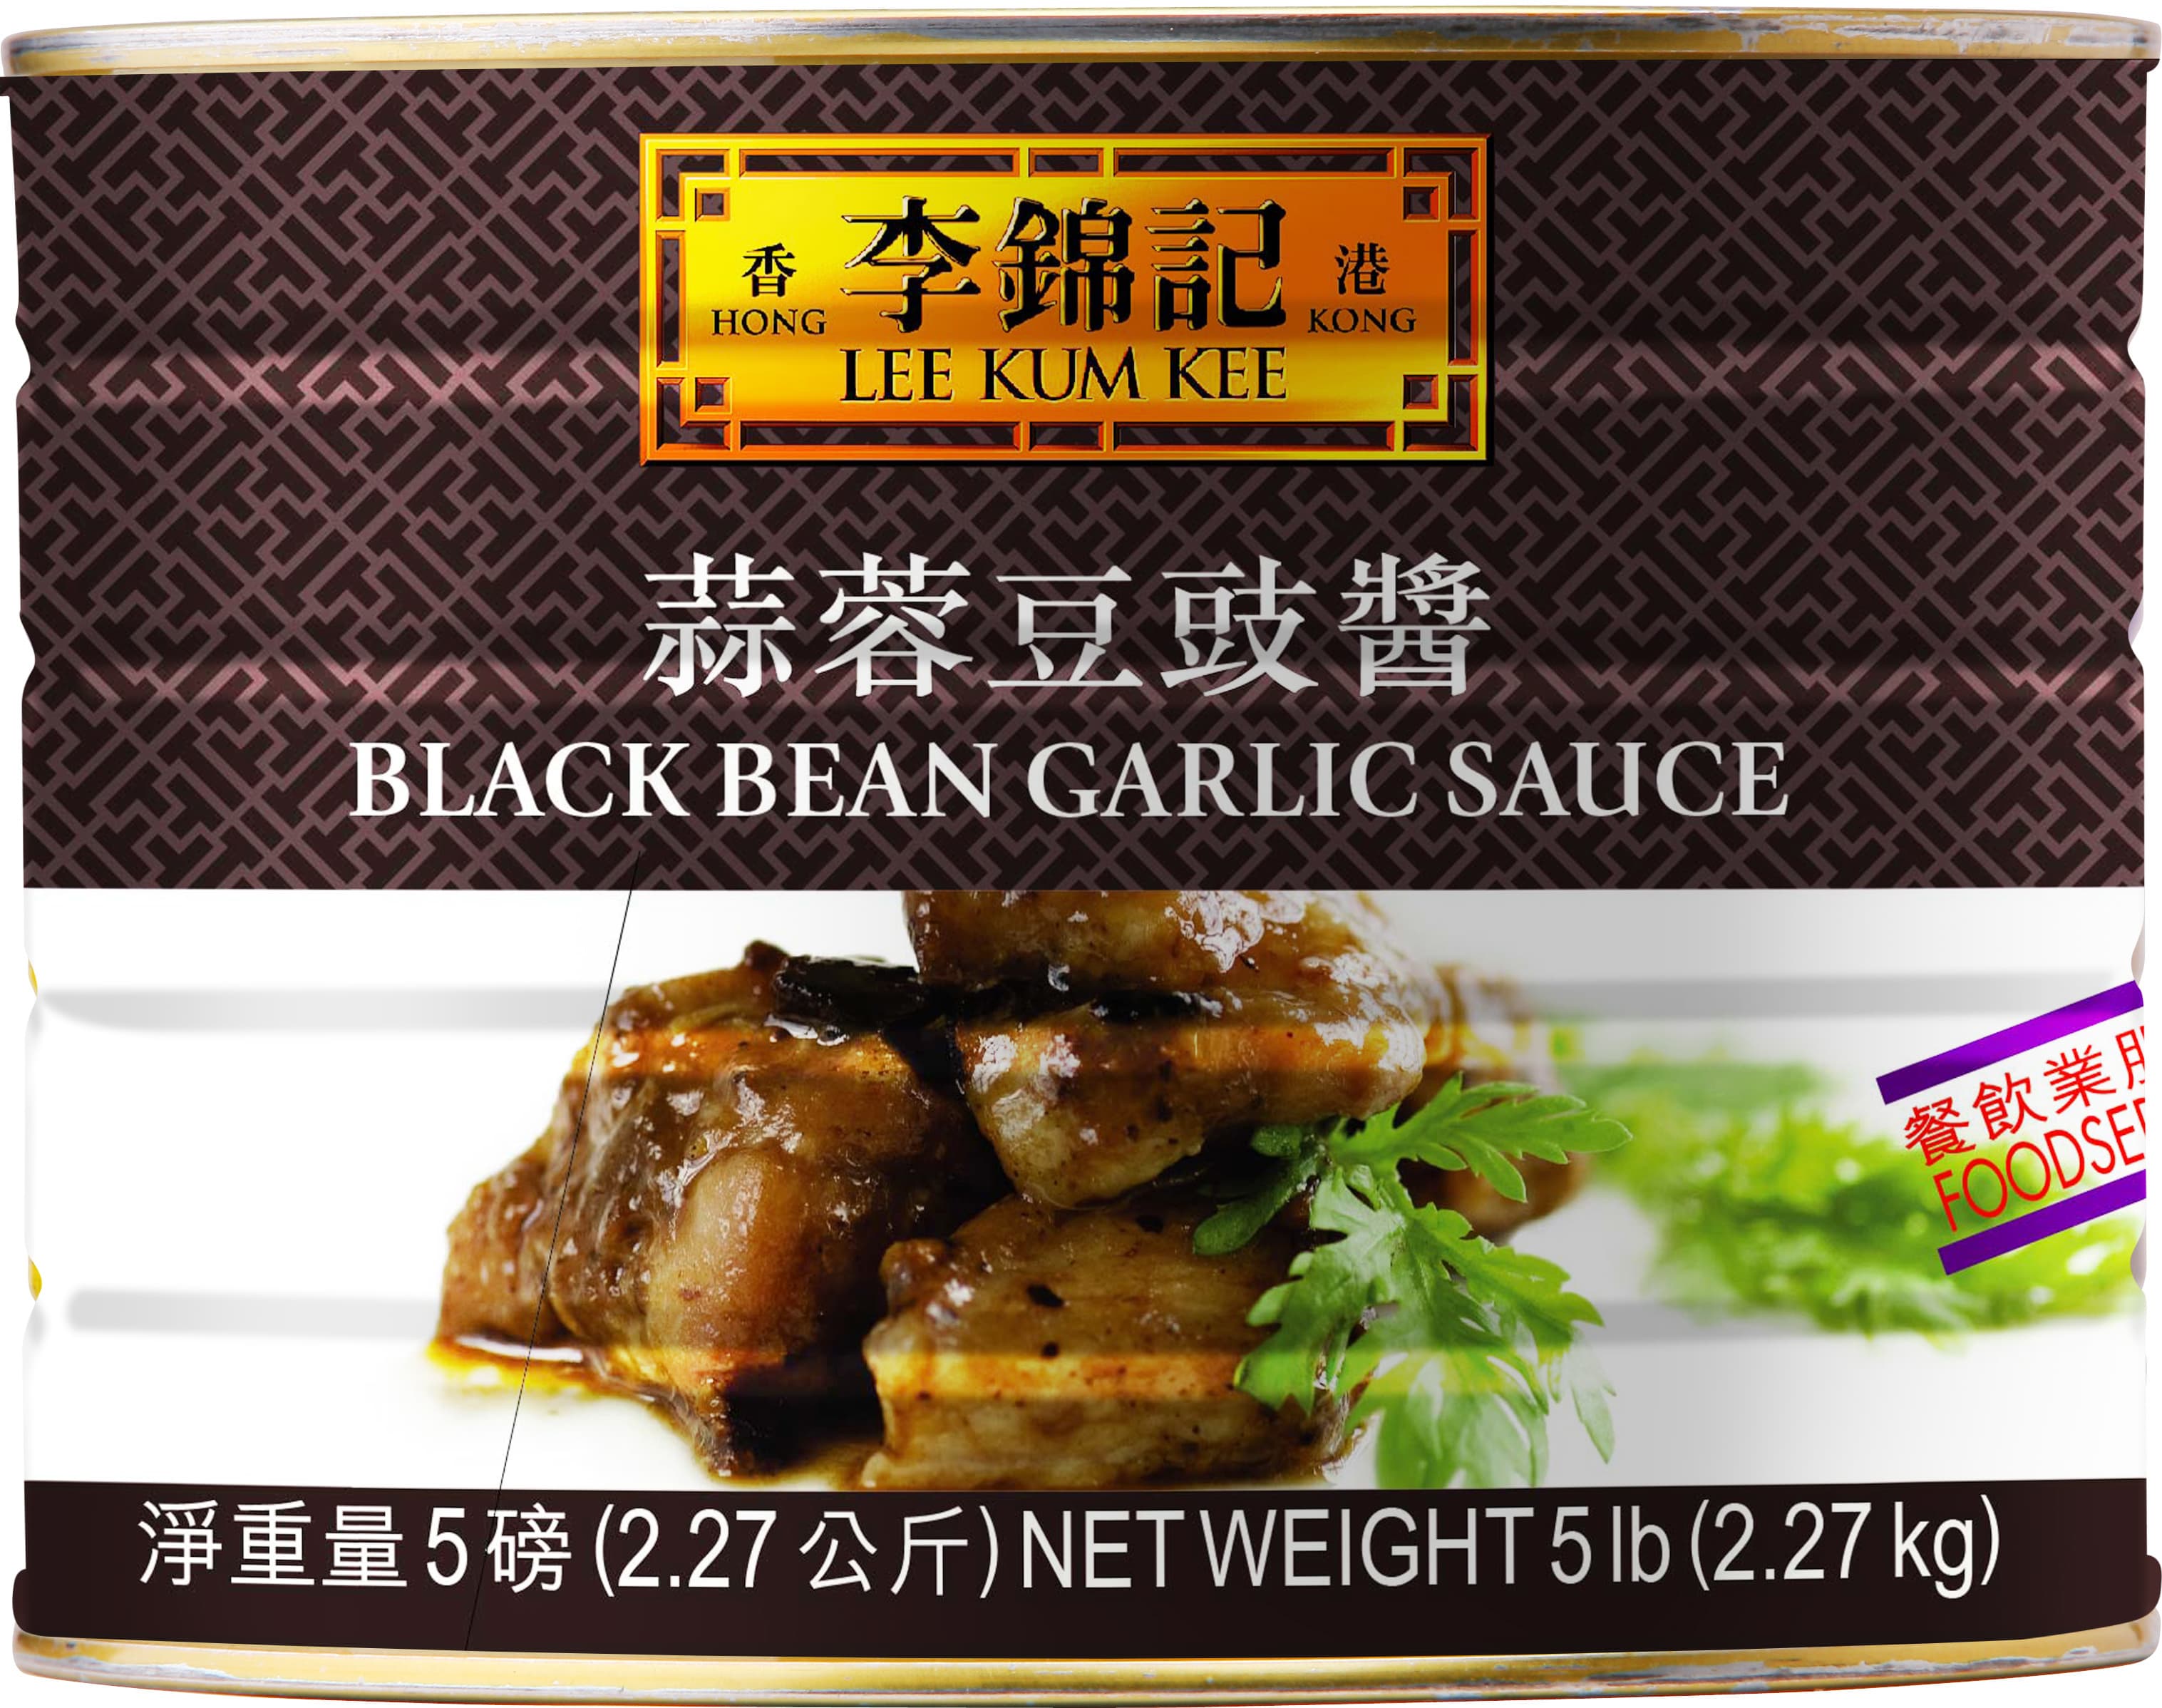 BlackbeanGarlicBean Sauce 5lb 227kg 4625in